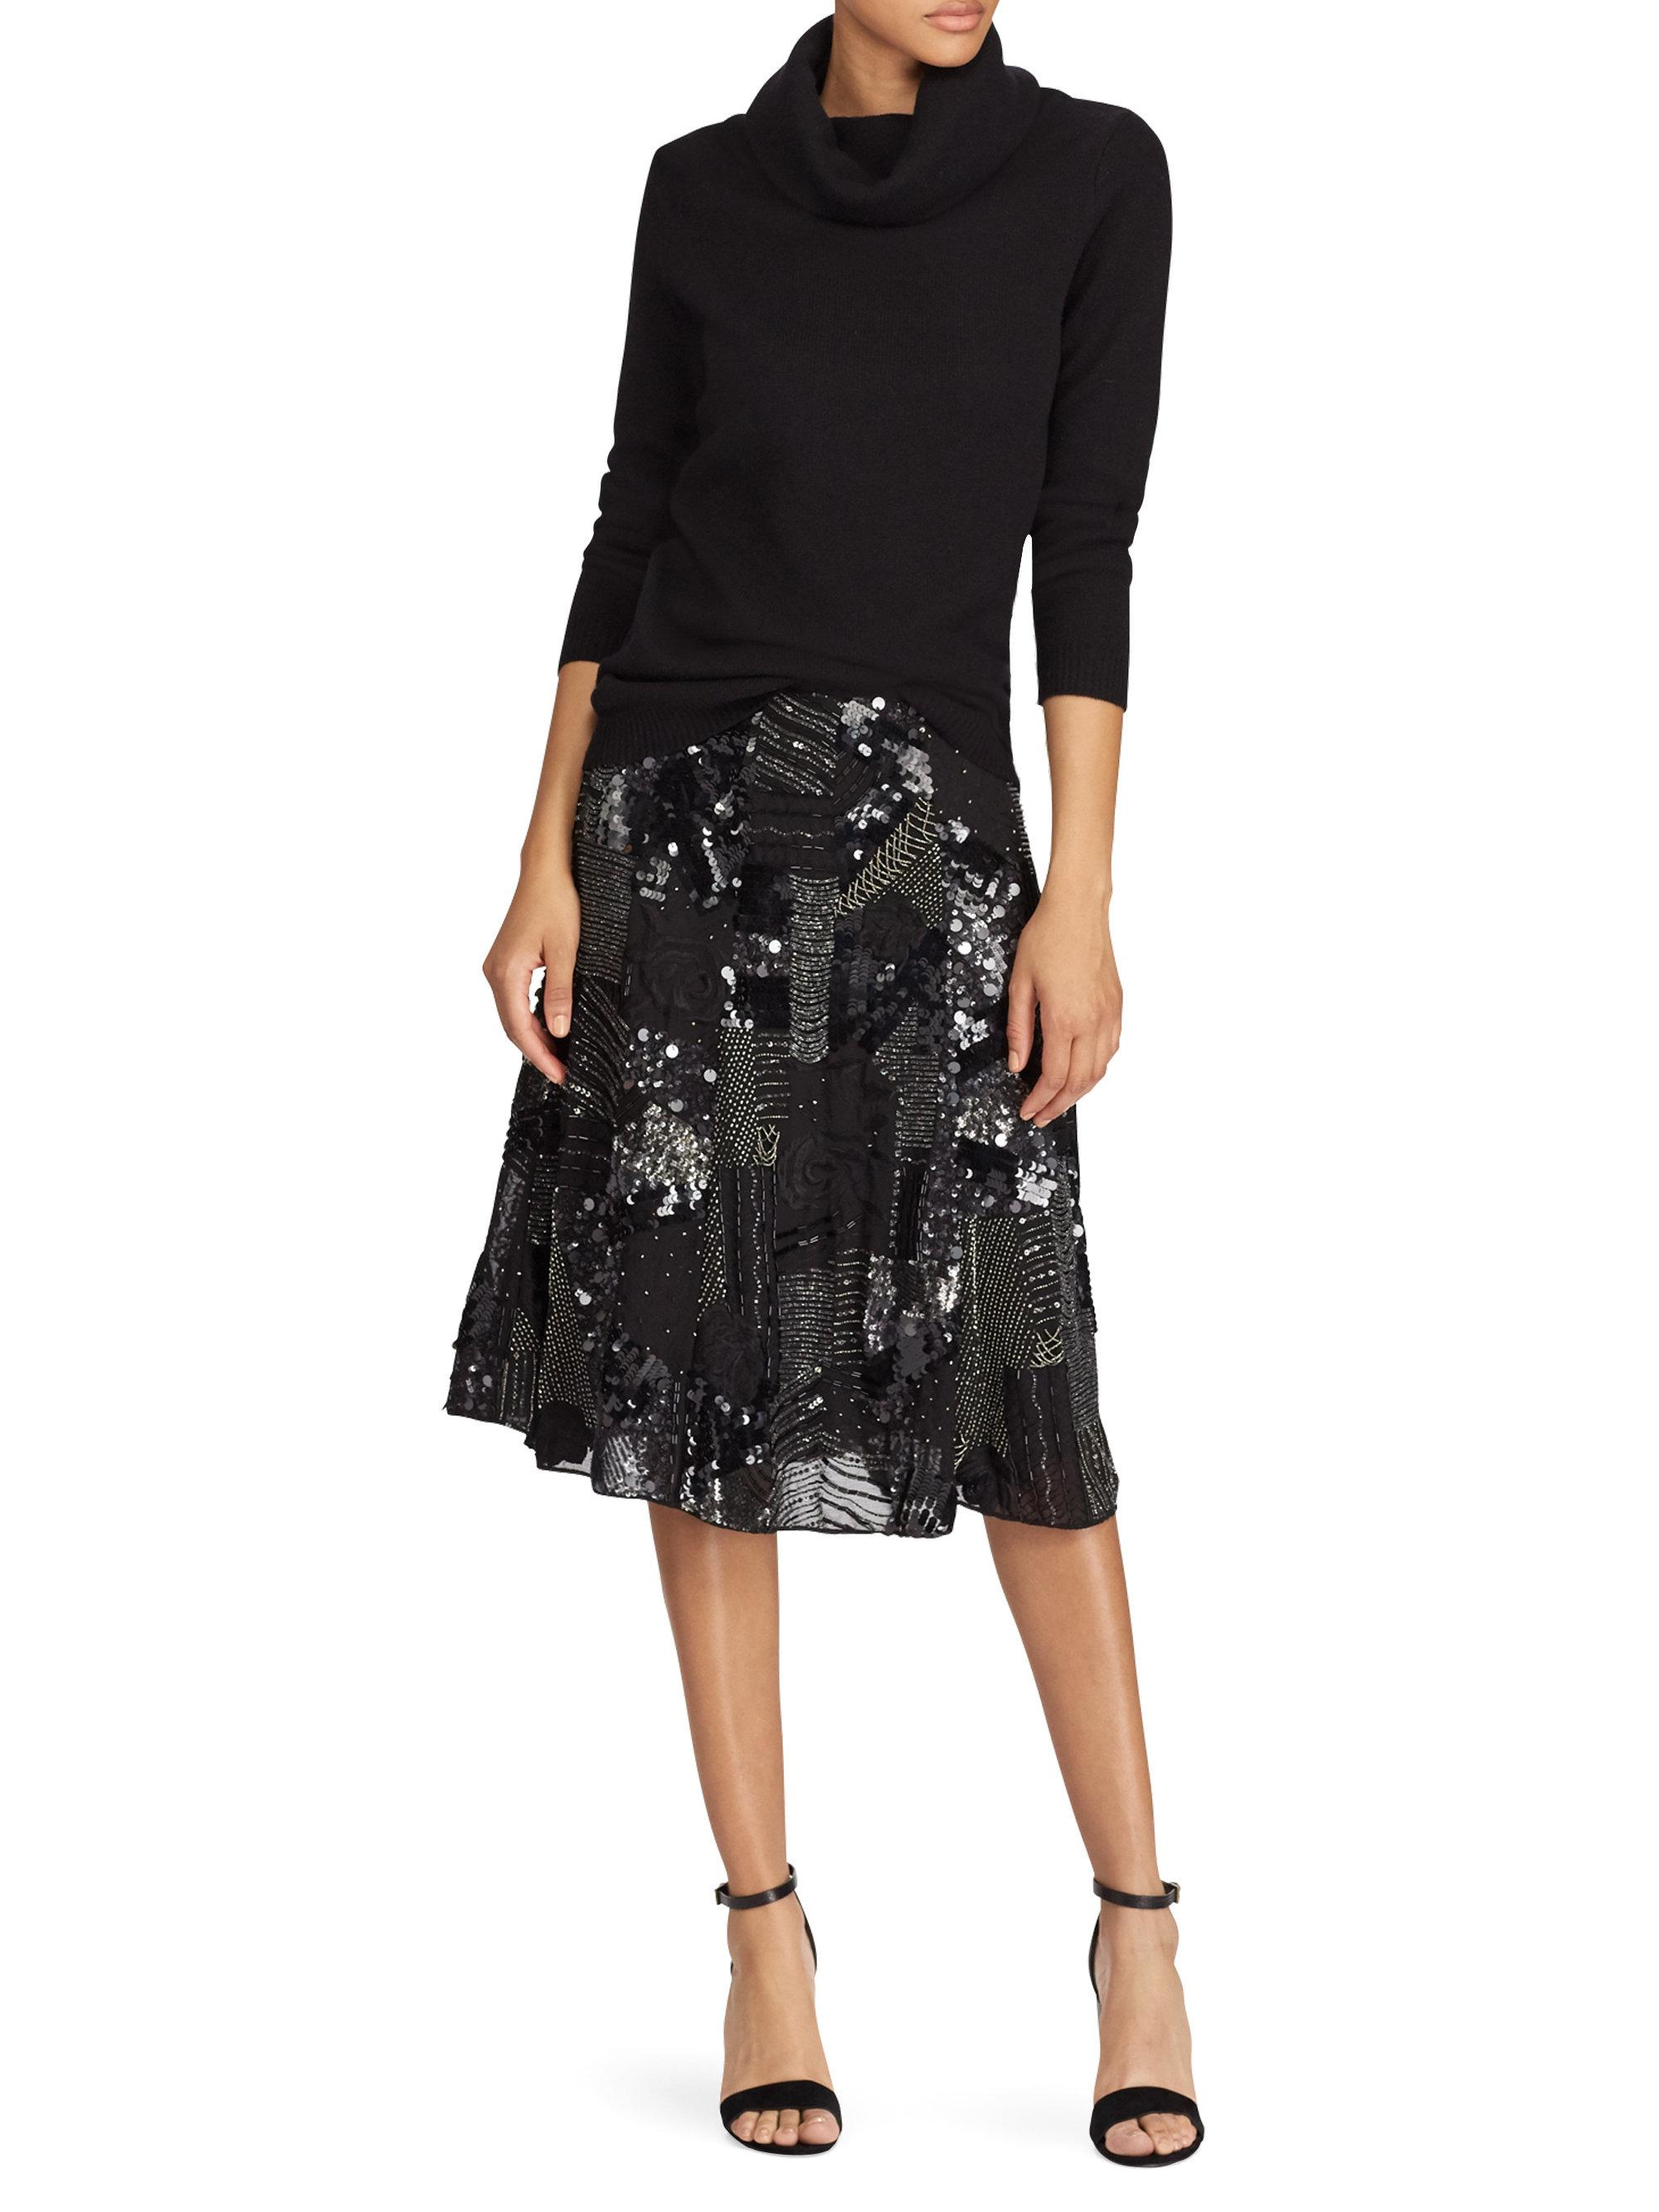 Polo Ralph Lauren Synthetic Sequin Midi Skirt in Black - Lyst